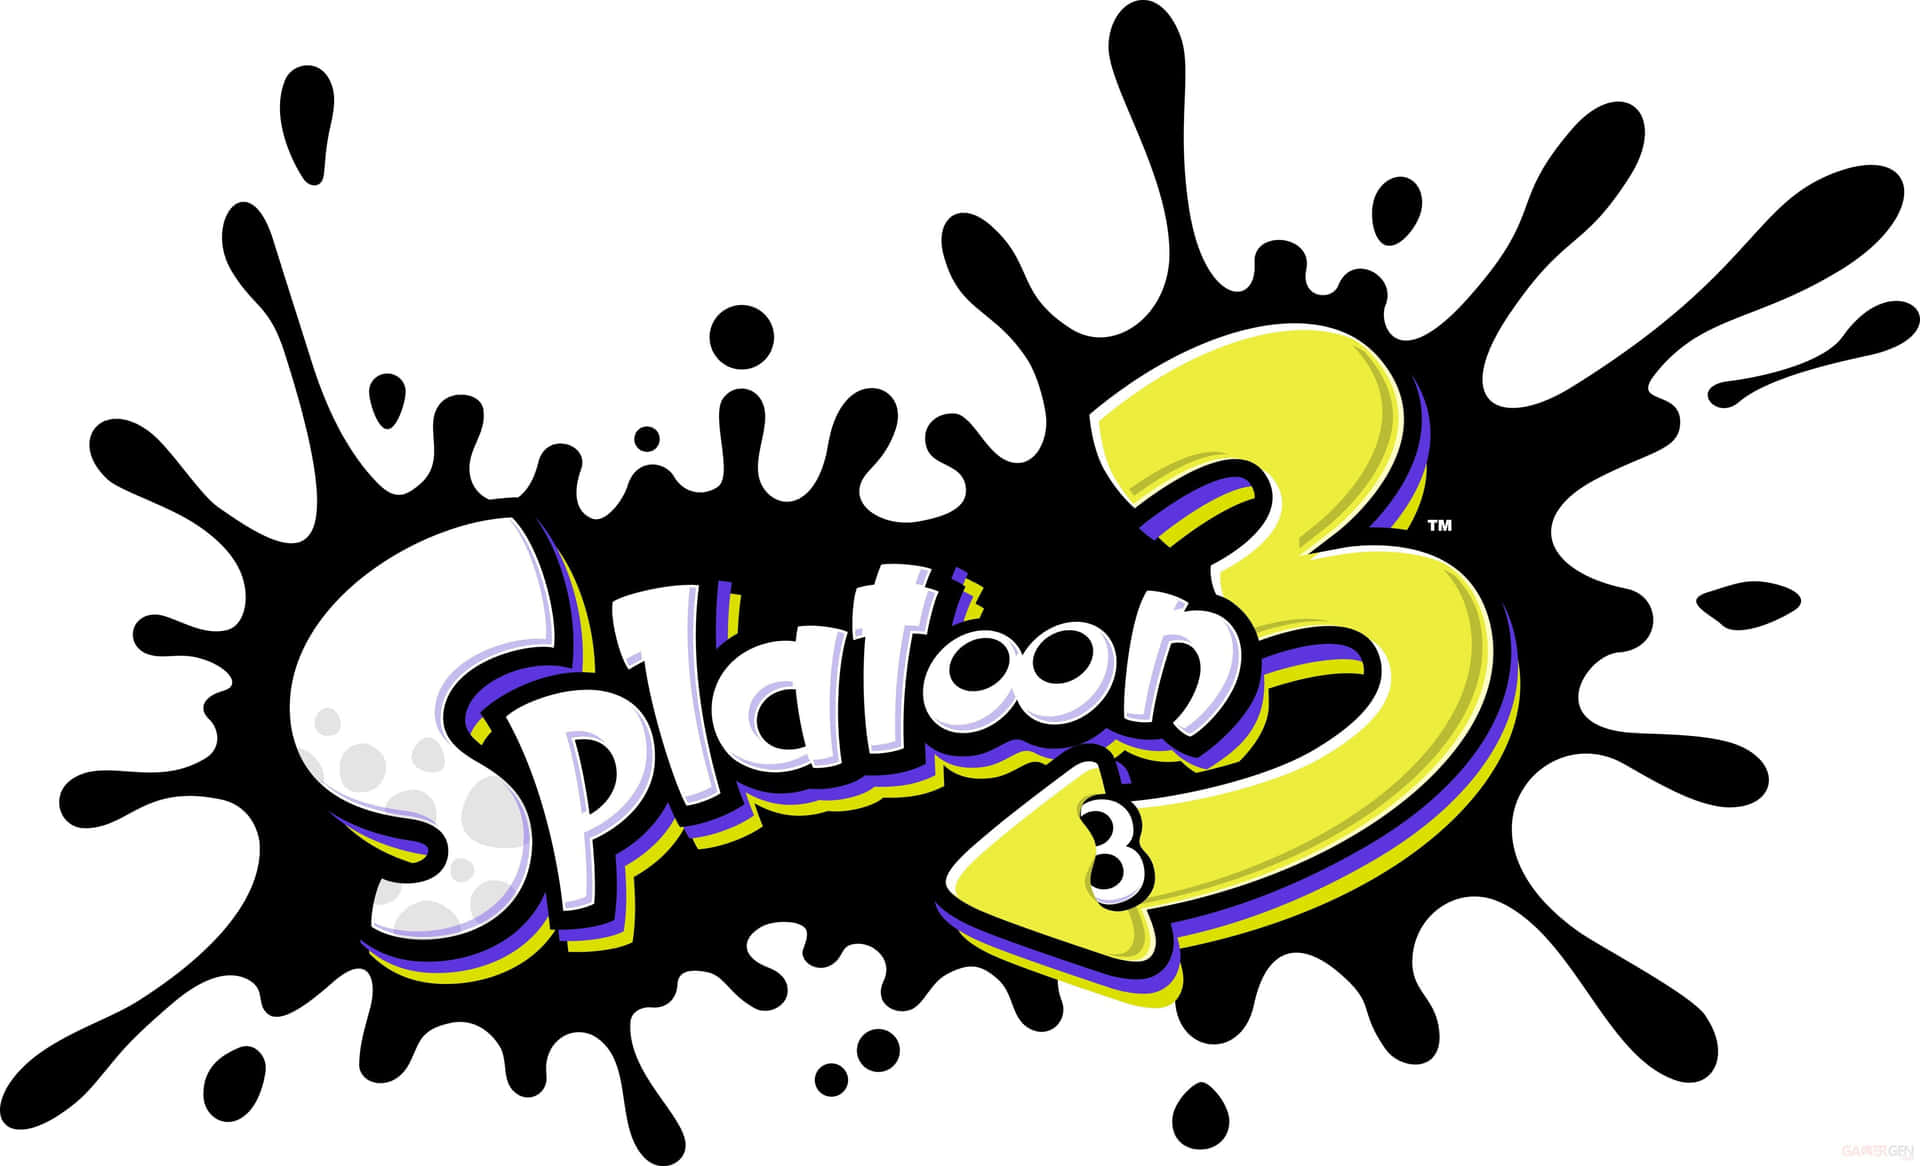 Splatoon3 Logo Splash Wallpaper